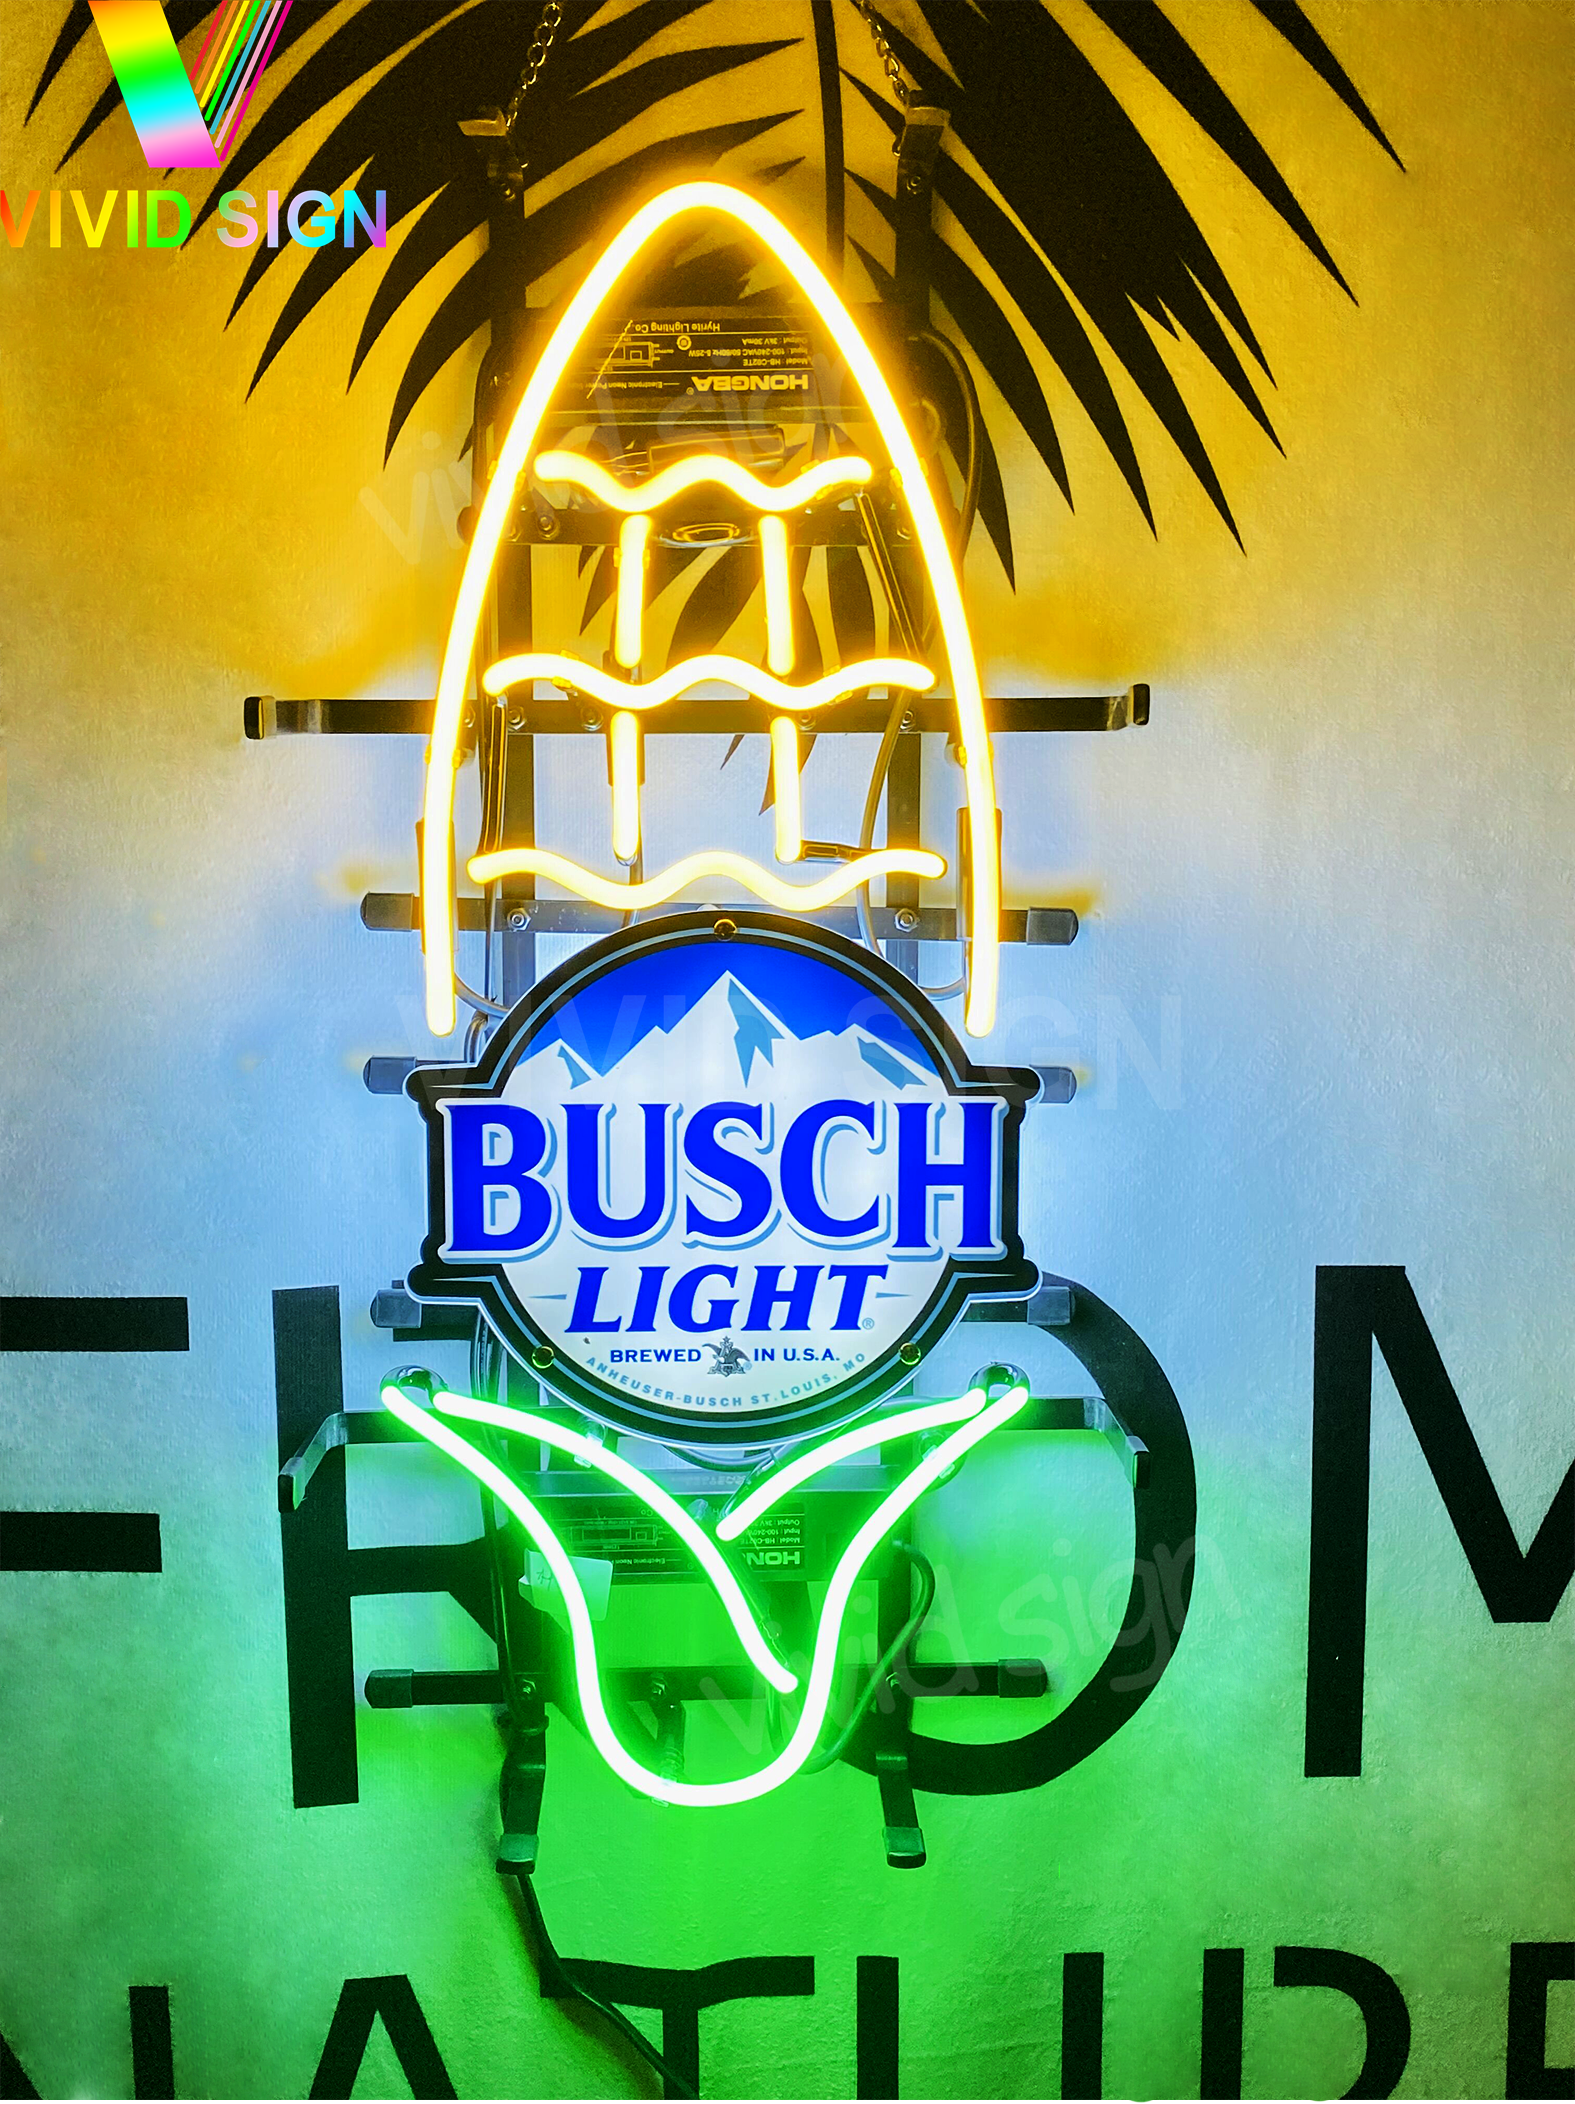 John Deere Busch Beer Tractor LED Neon Sign Light Lamp –